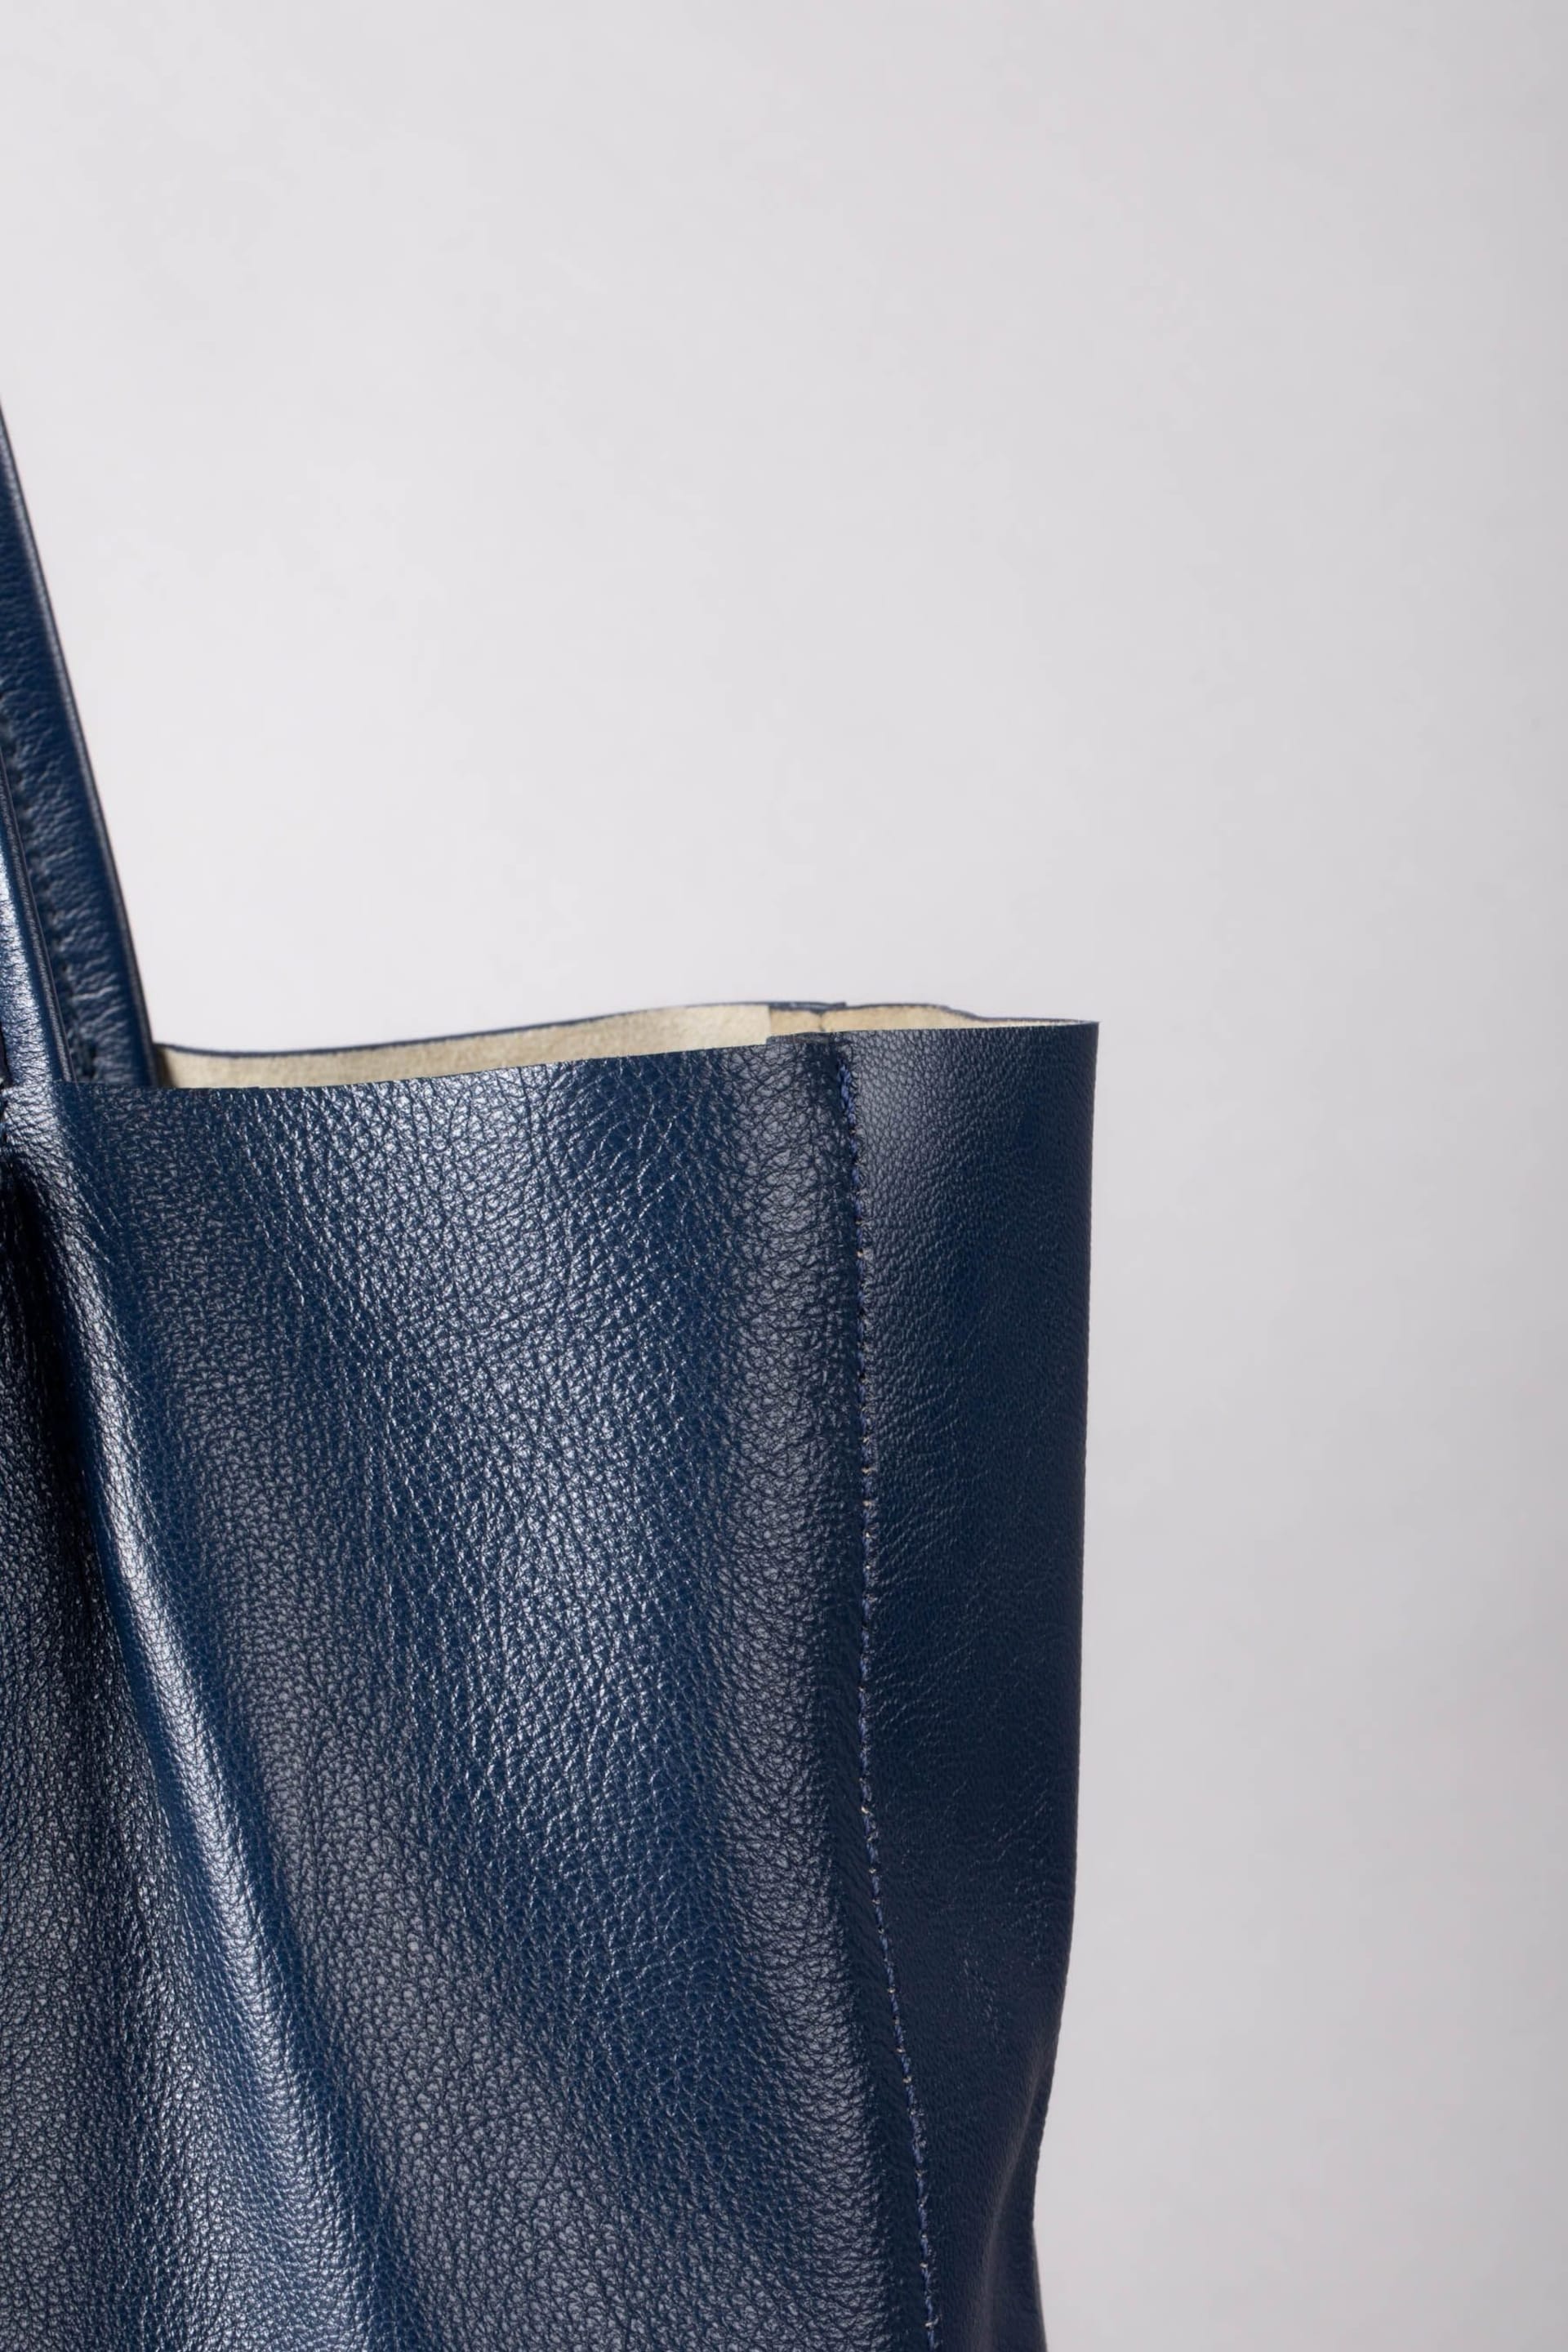 Lakeland Leather Blue Tarn Leather Bucket Bag - Image 4 of 8